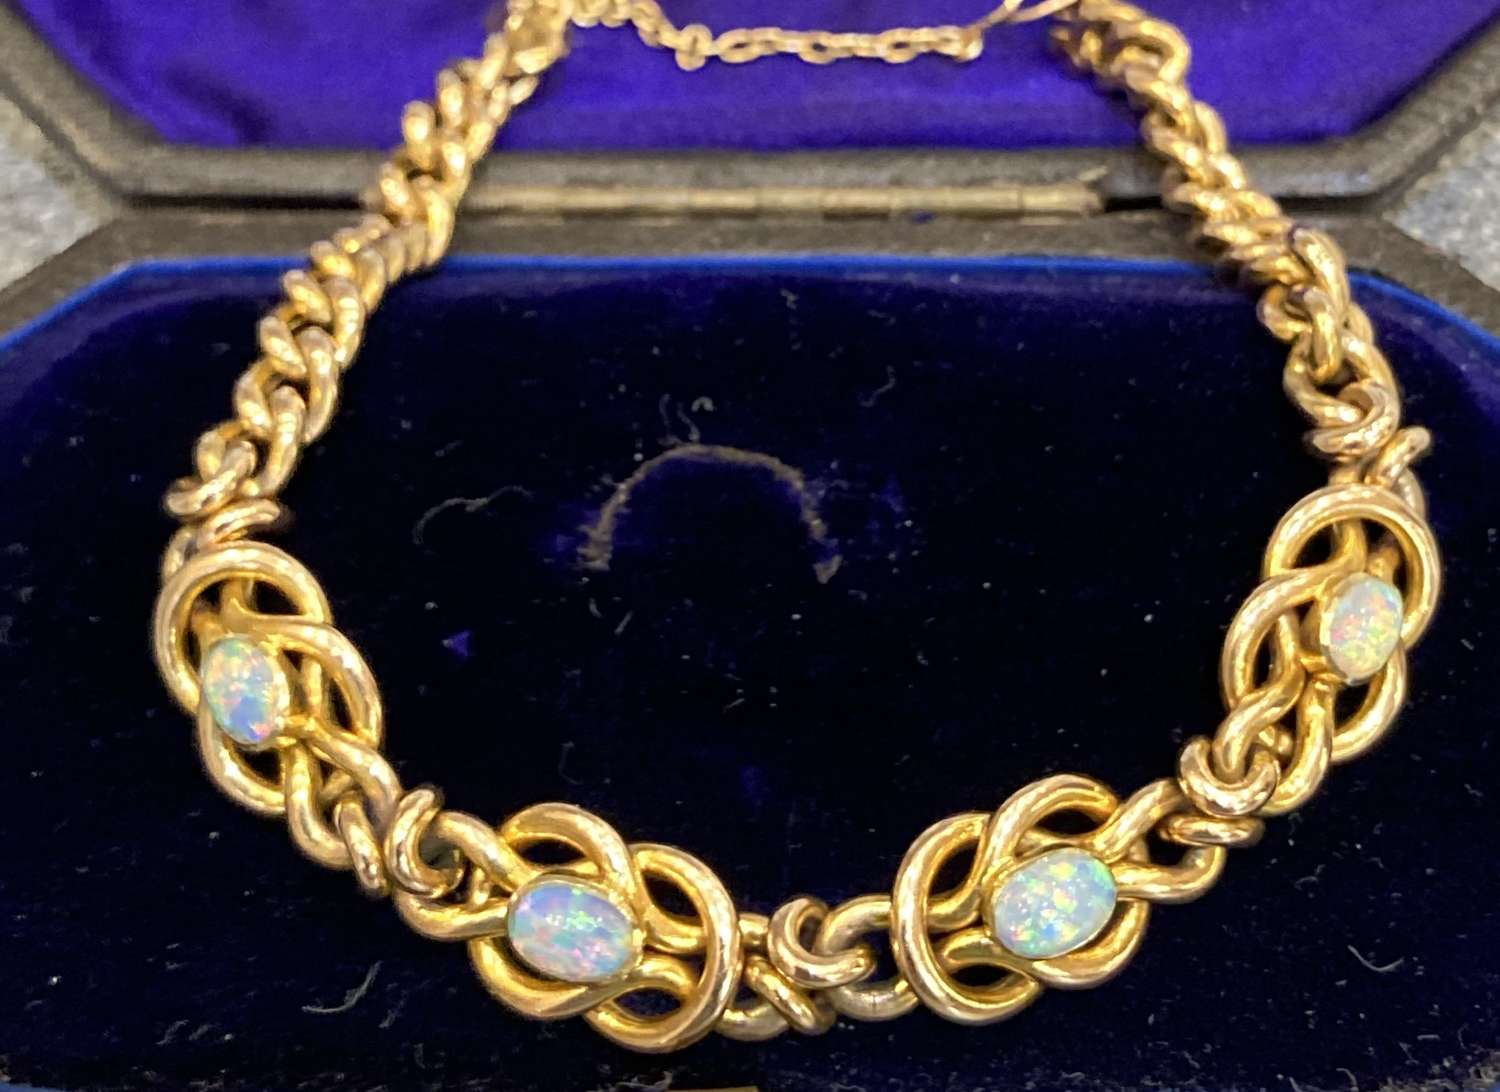 A 15 carat opal bracelet